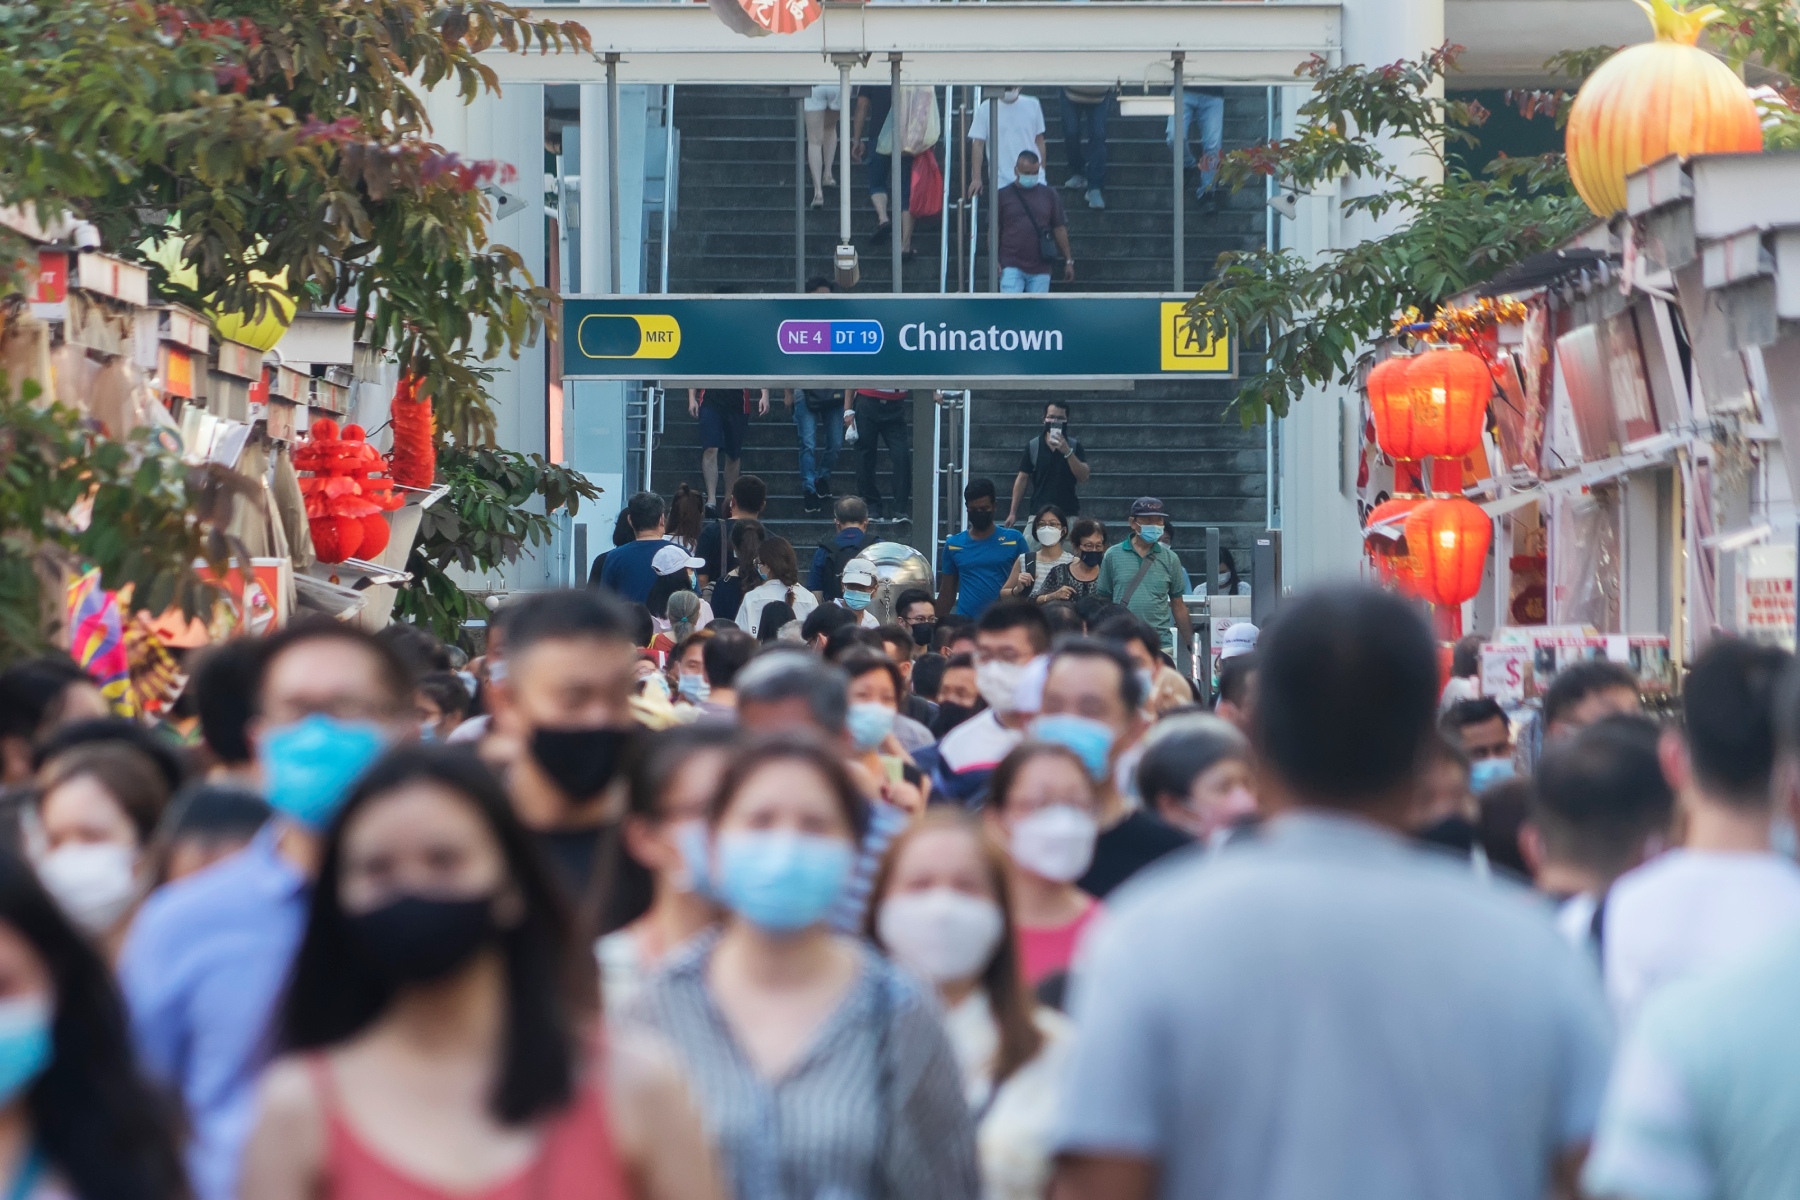 Crowds walking through Chinatown in Singapore